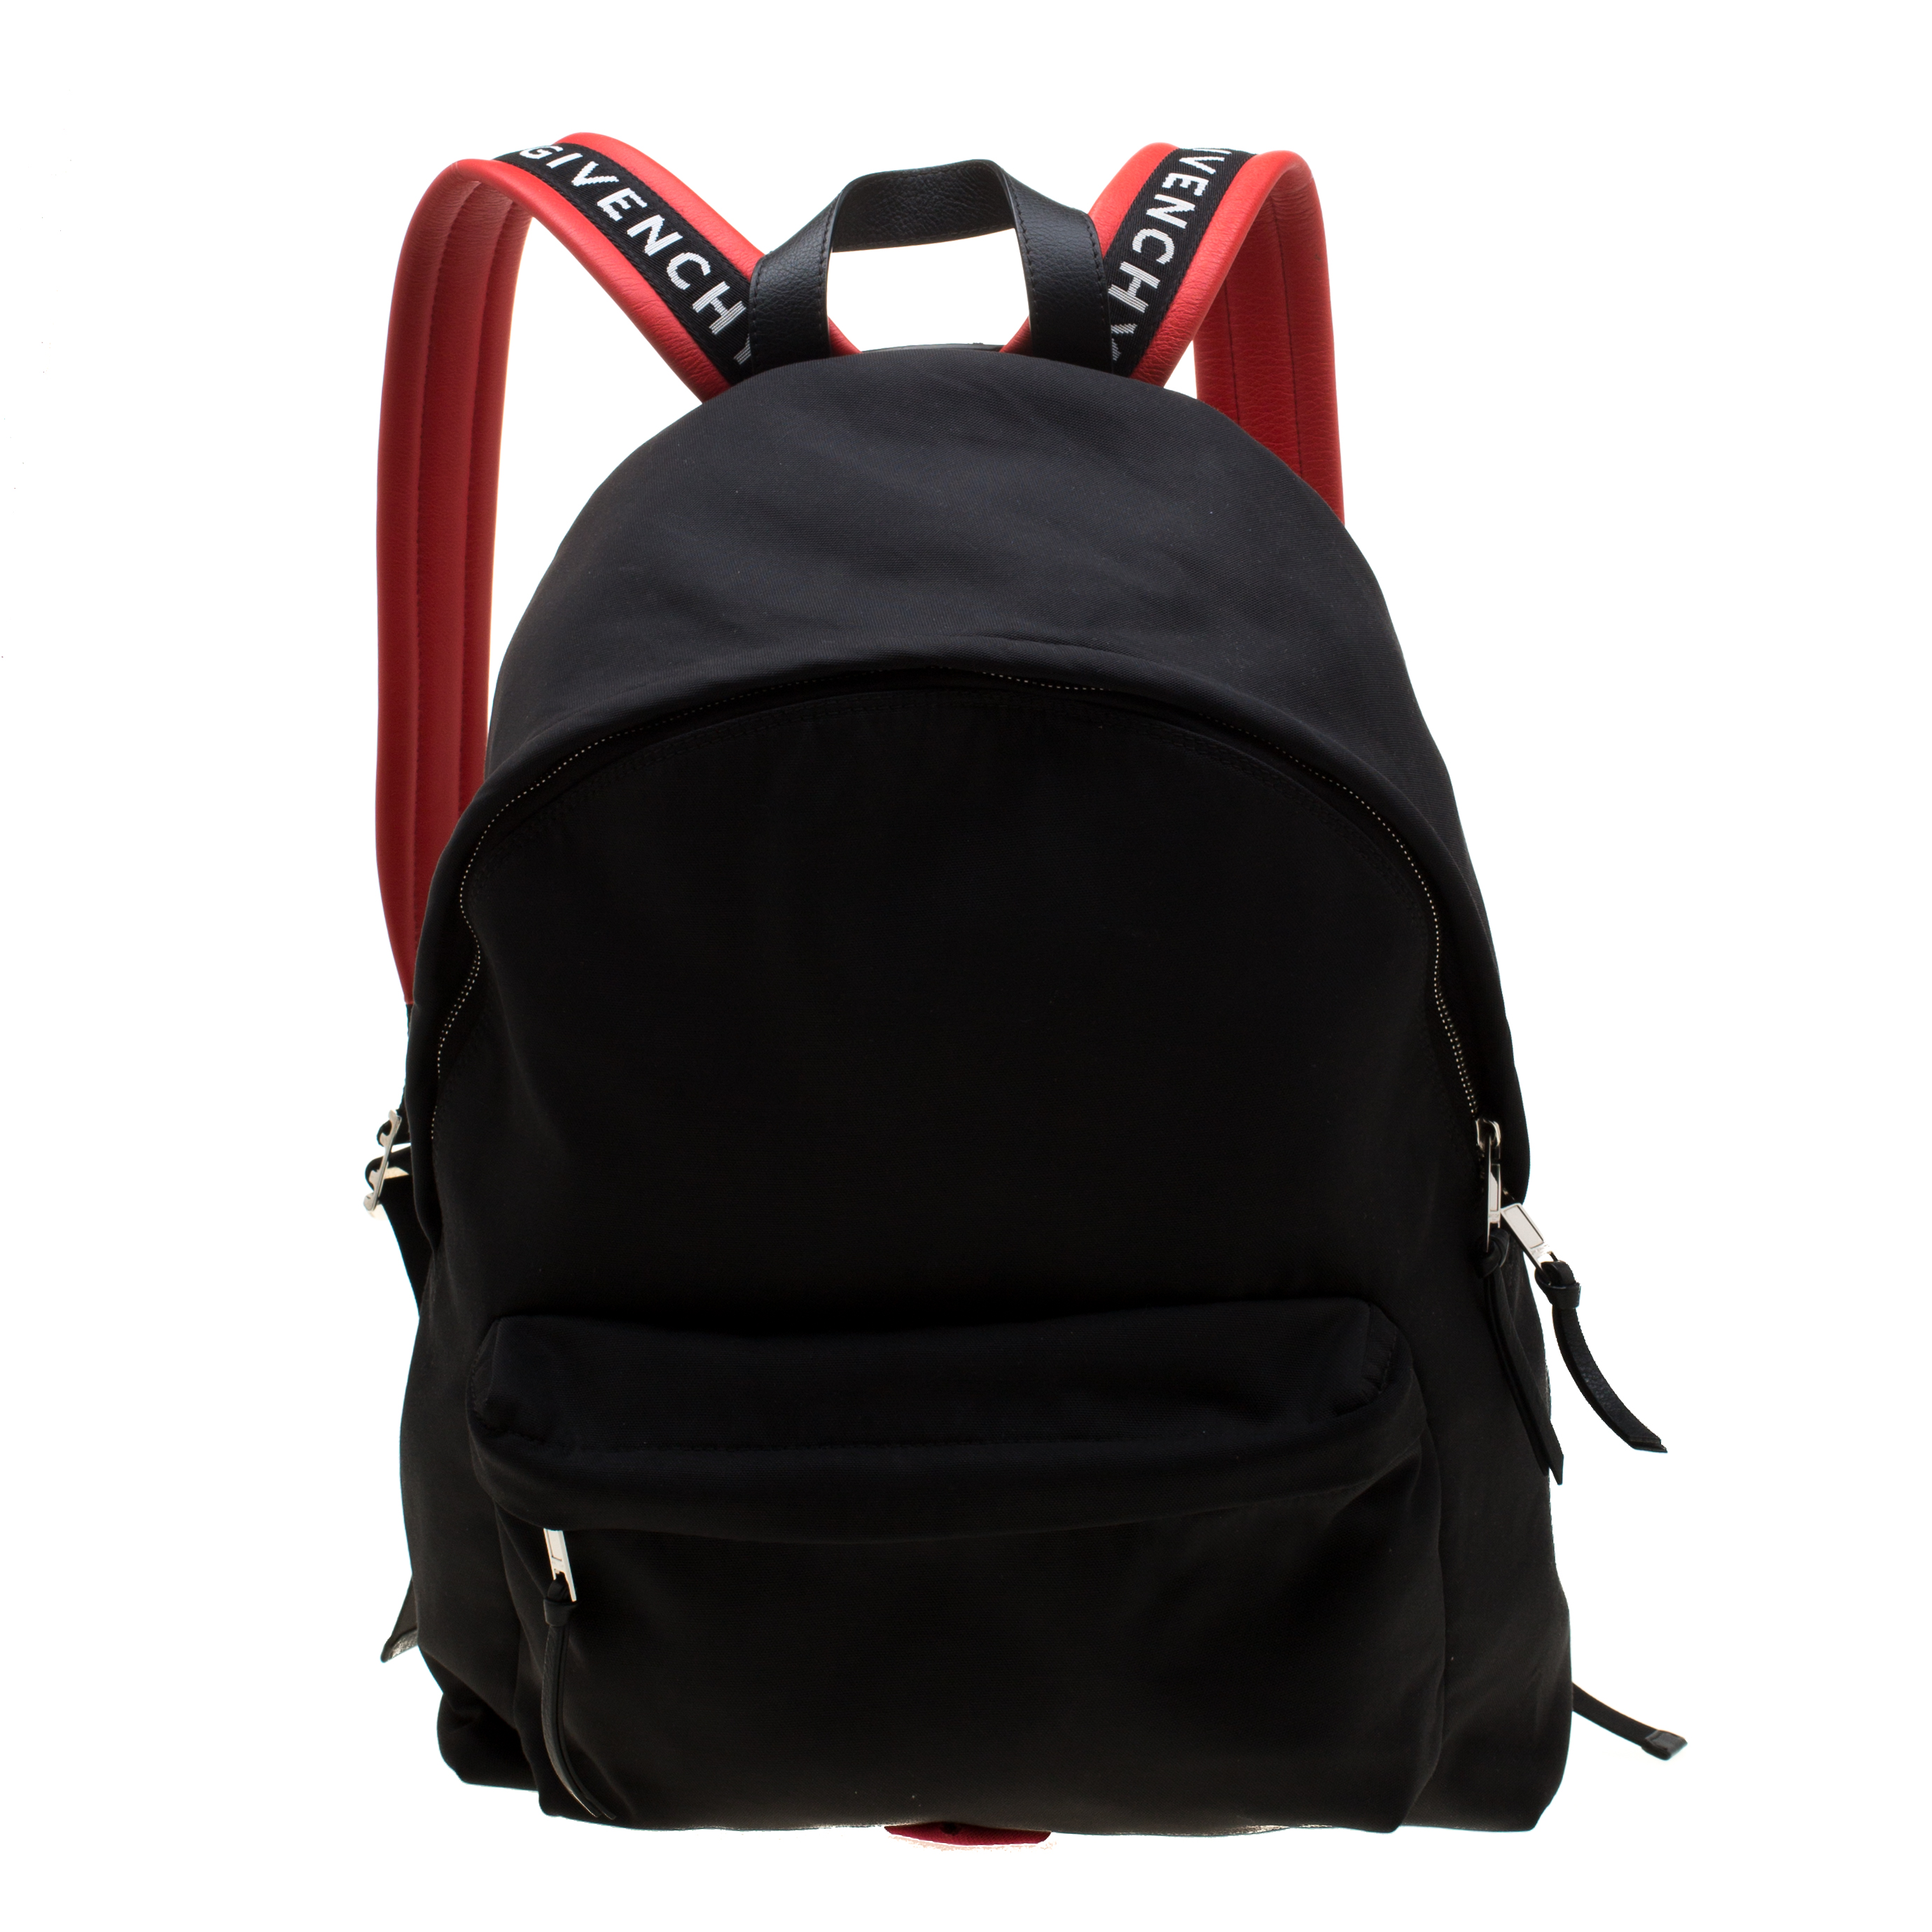 givenchy backpack black